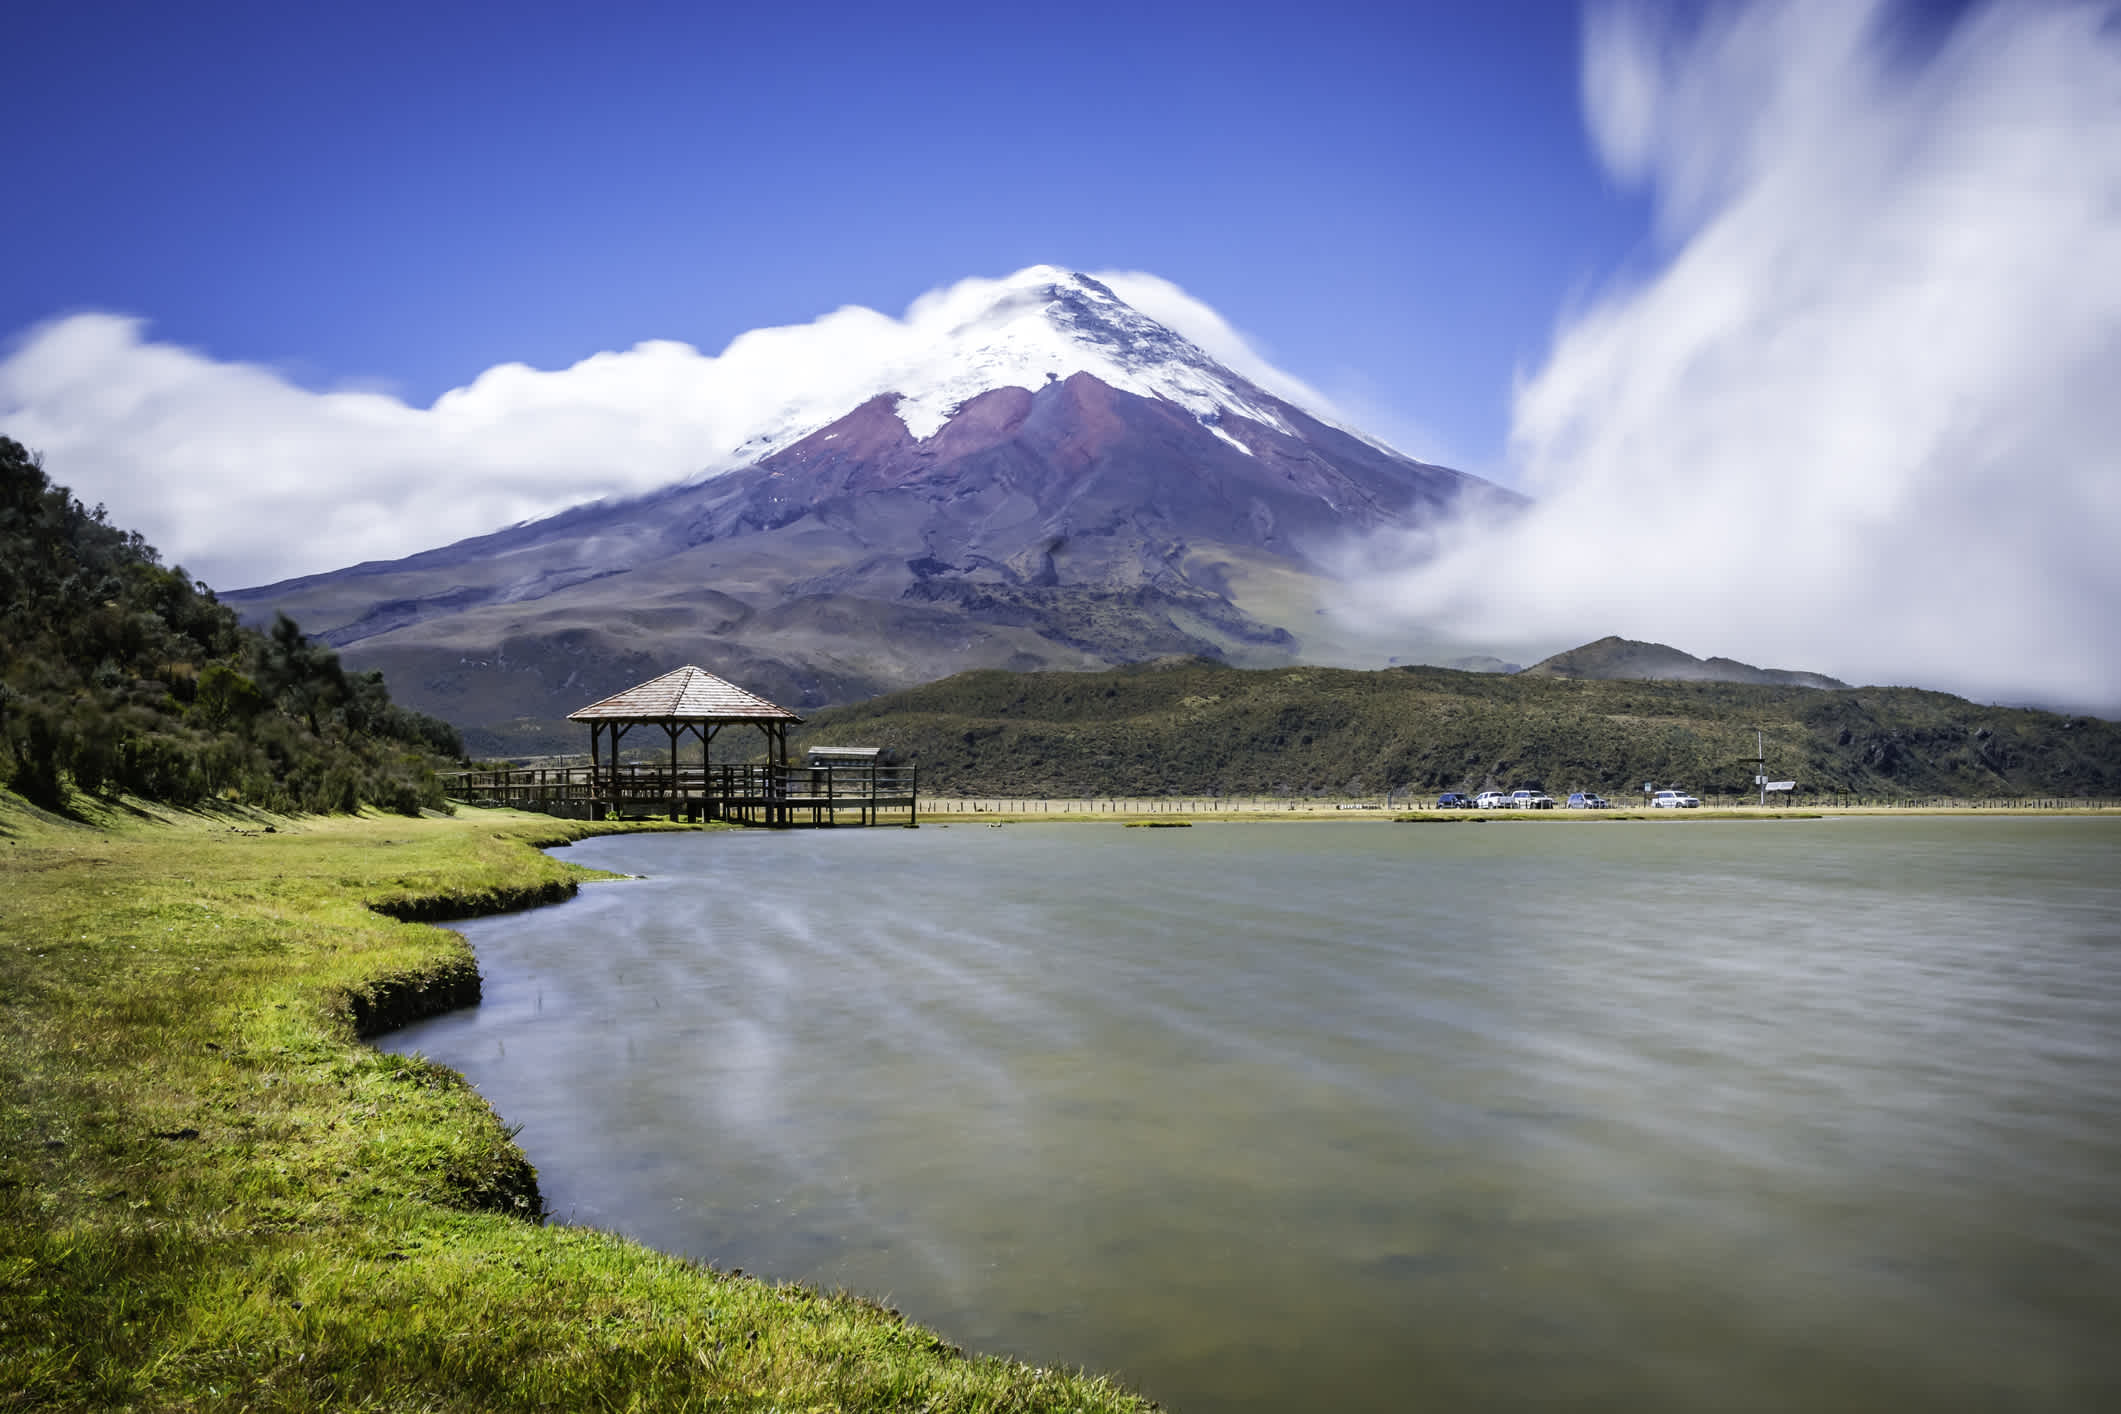 Vulkan Cotopaxi und Holzpavillon am Fuße des Berges in Ecuador.
